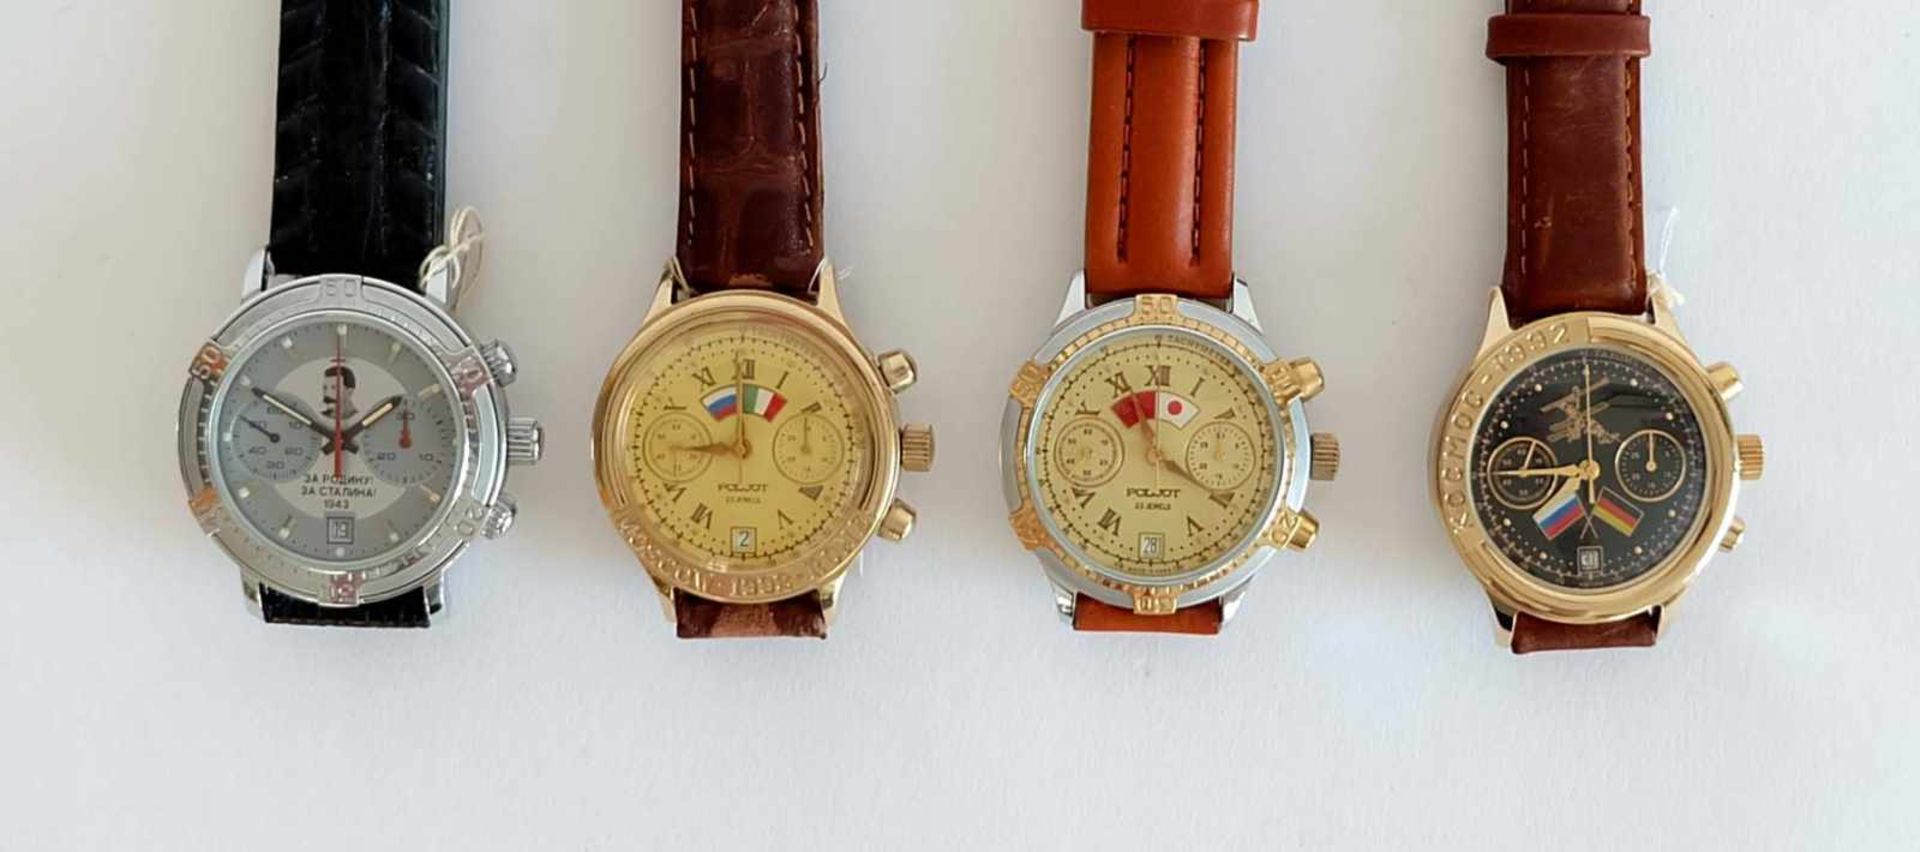 HAU, Konvolut von 4, Herst. Erste Moskauer Uhrenfabrik, Marke Poljot, Handaufzug, Chronograph, je 23